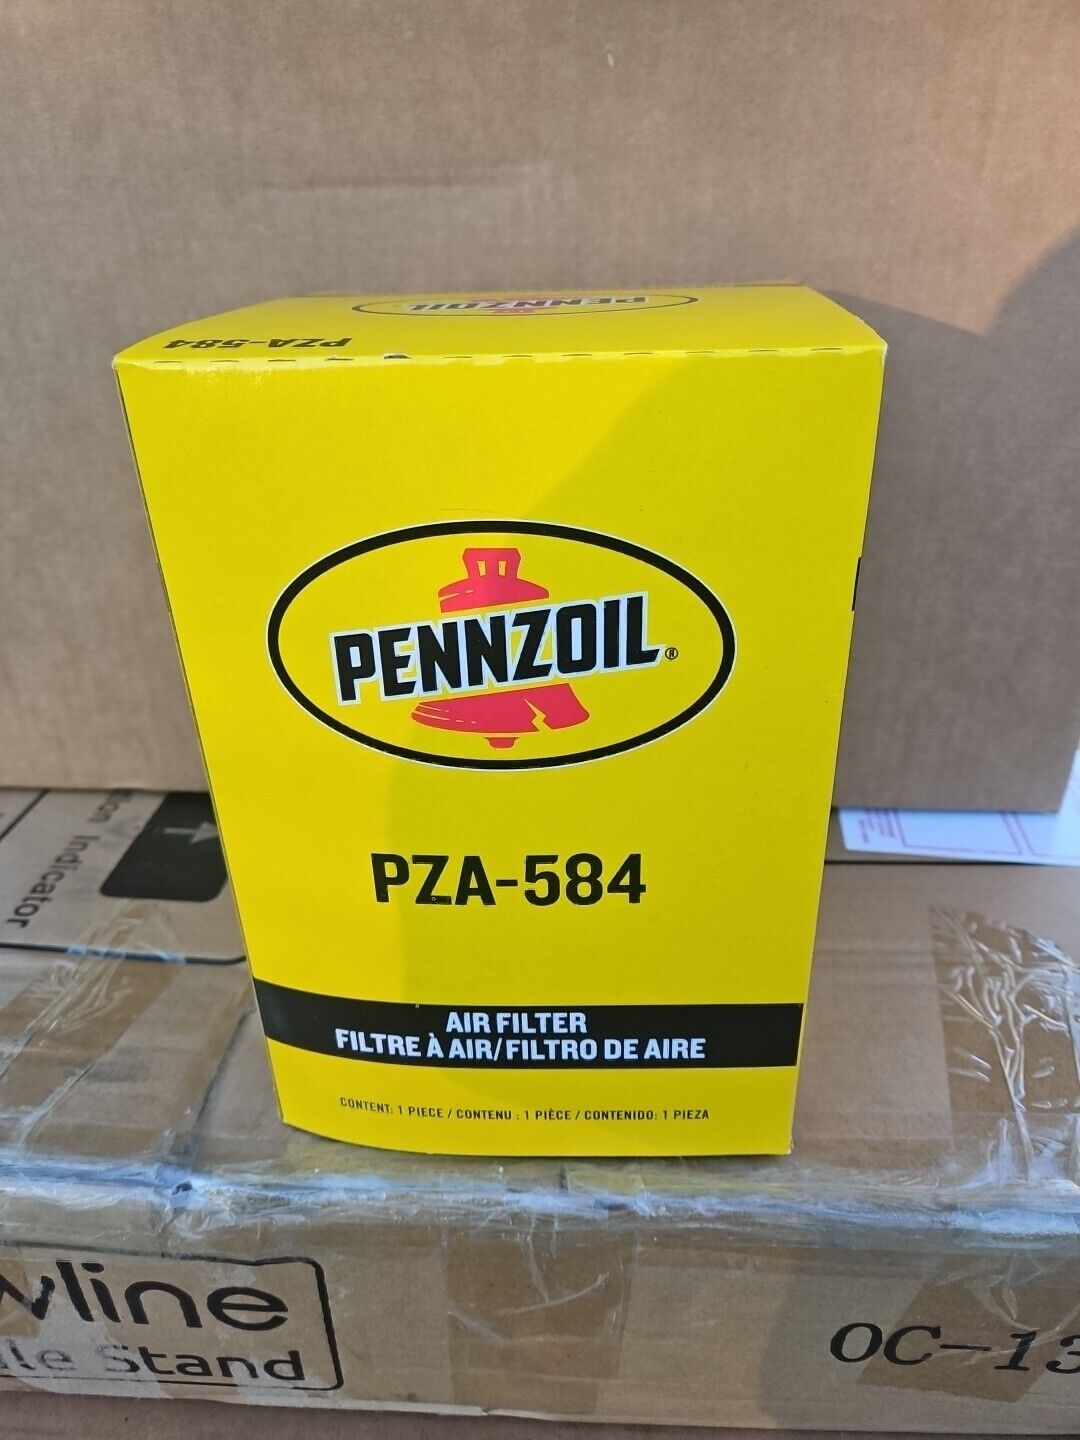 Pennzoil PZA-584 Air Filter